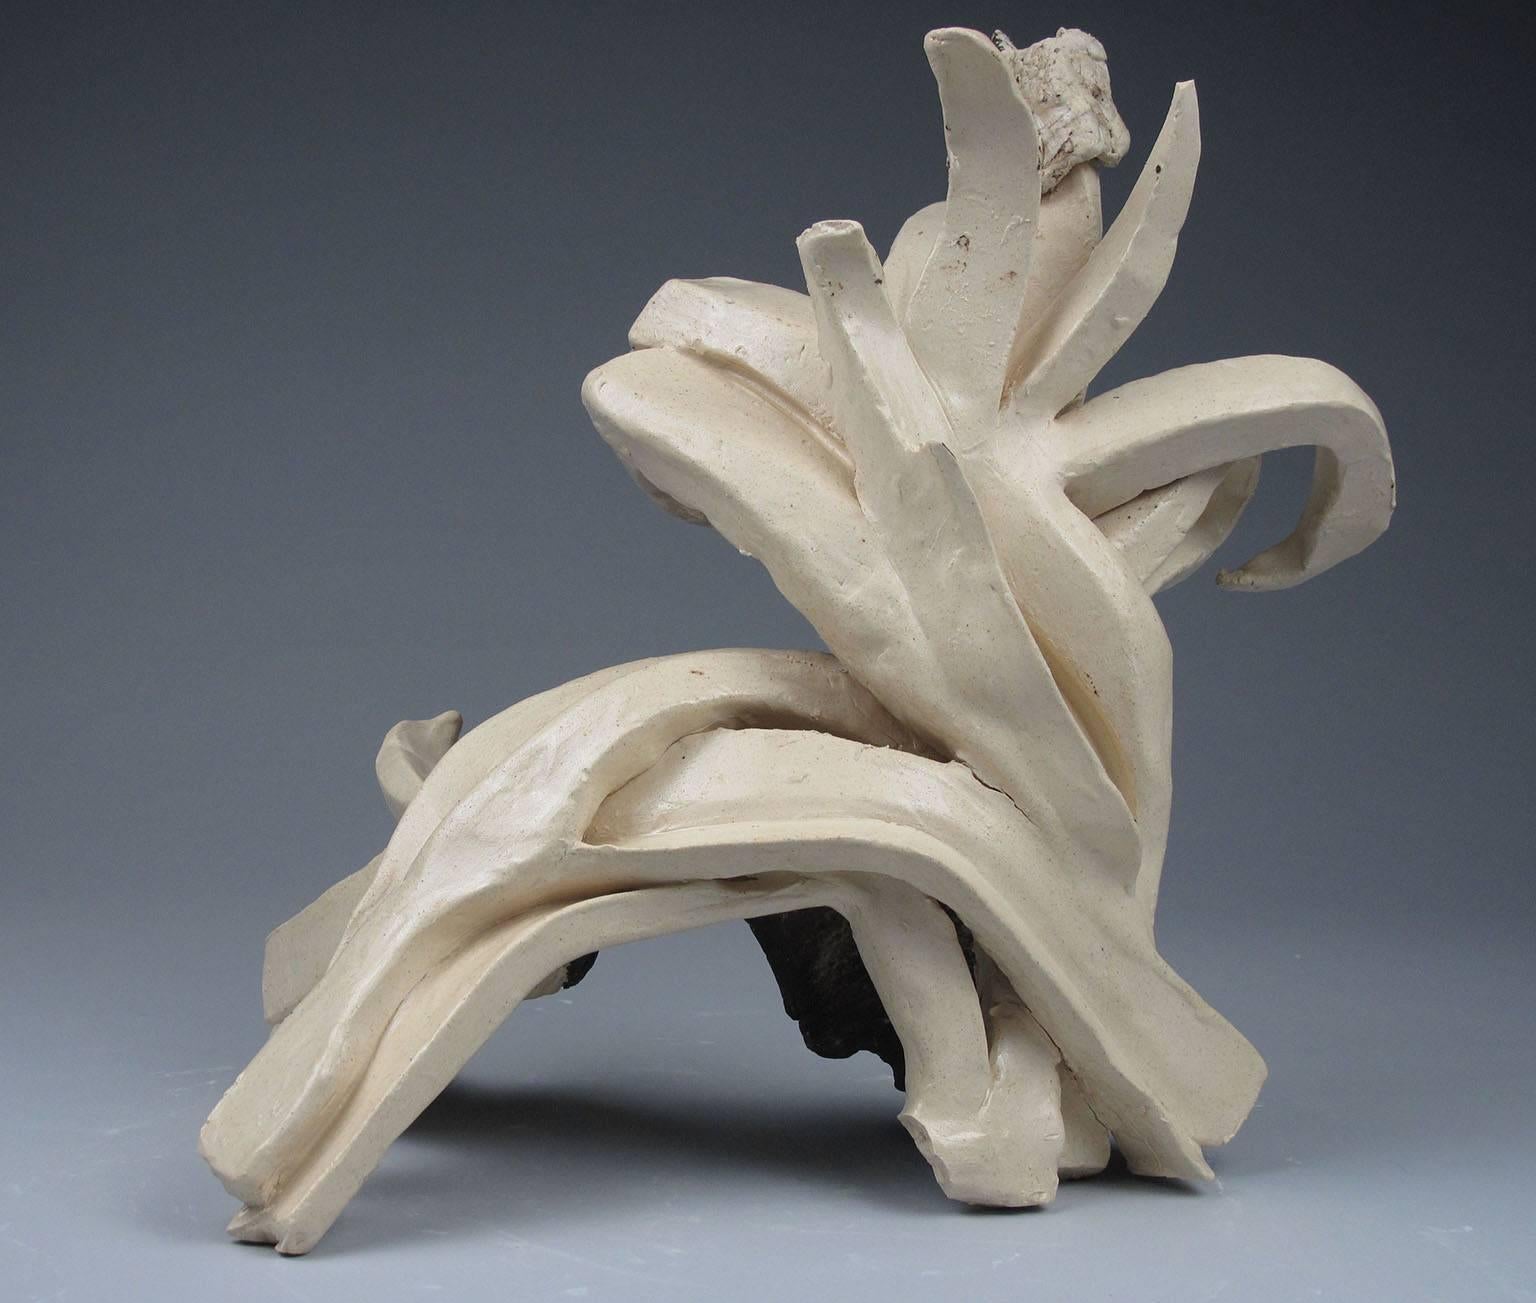 Sara Fine-Wilson Abstract Sculpture - "Bridge", abstract, ceramic, sculpture, white, brown